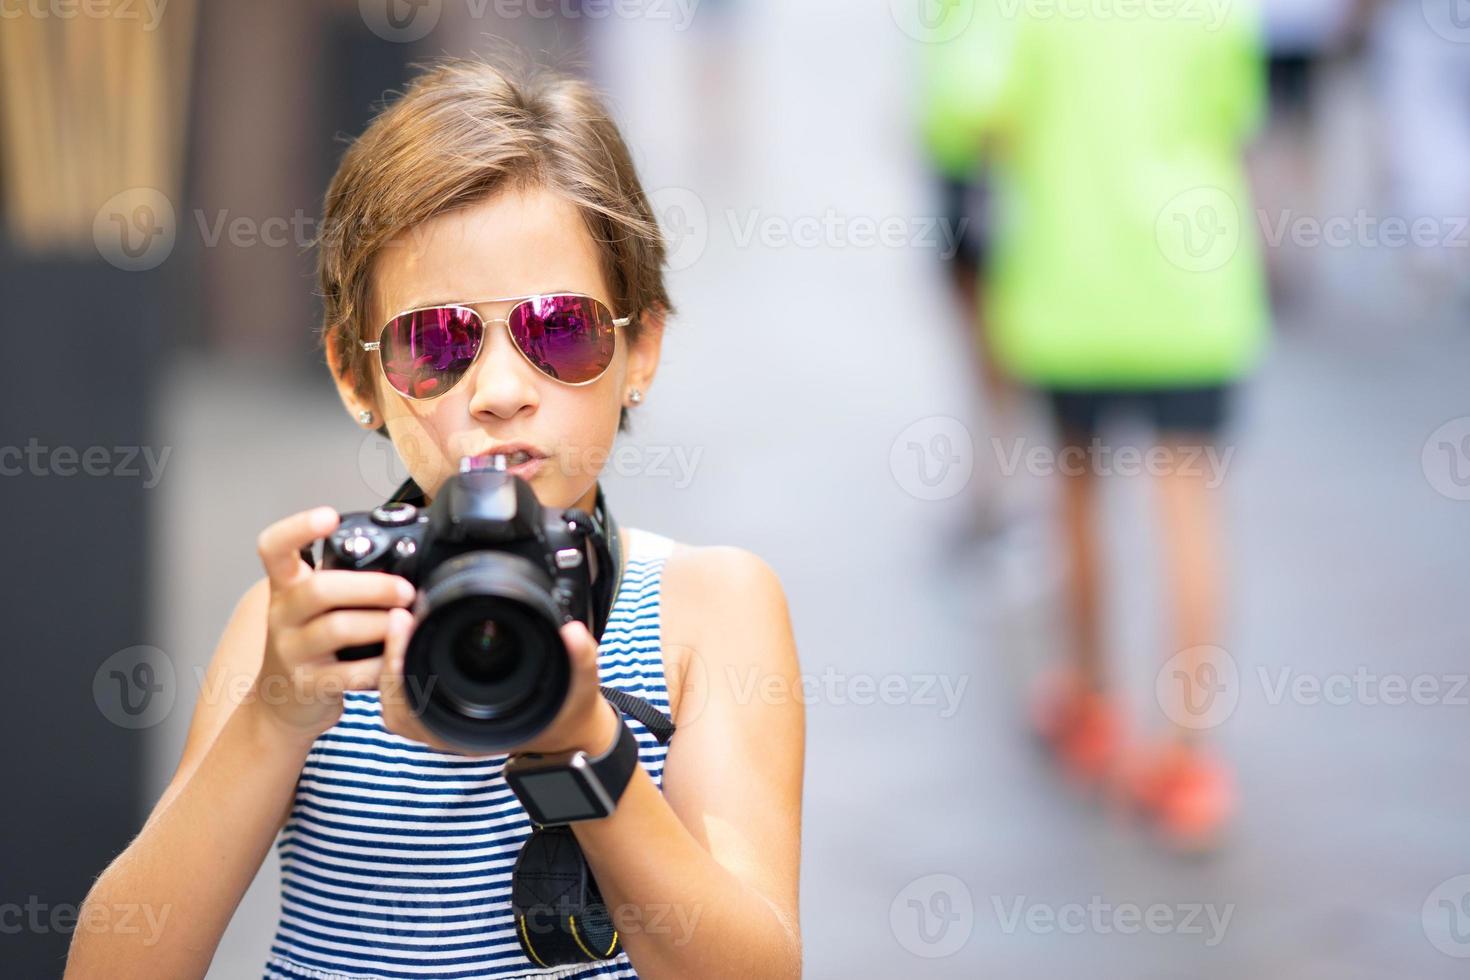 klein meisje dat foto maakt met dslr-camera op straat in de stad